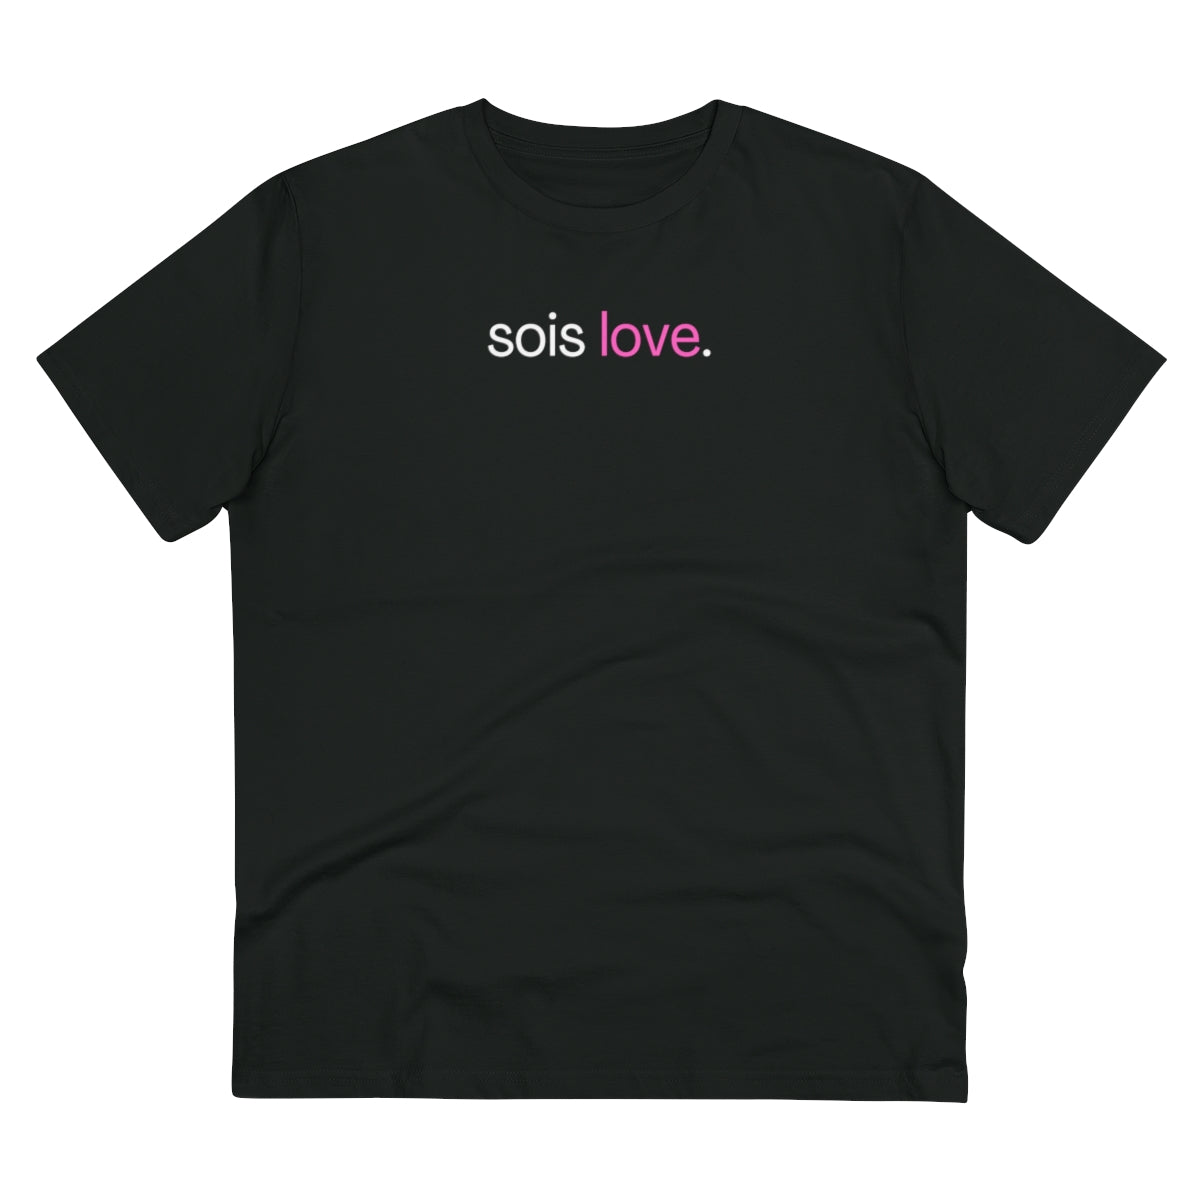 sois love. - Organic Creator T-shirt - Unisex